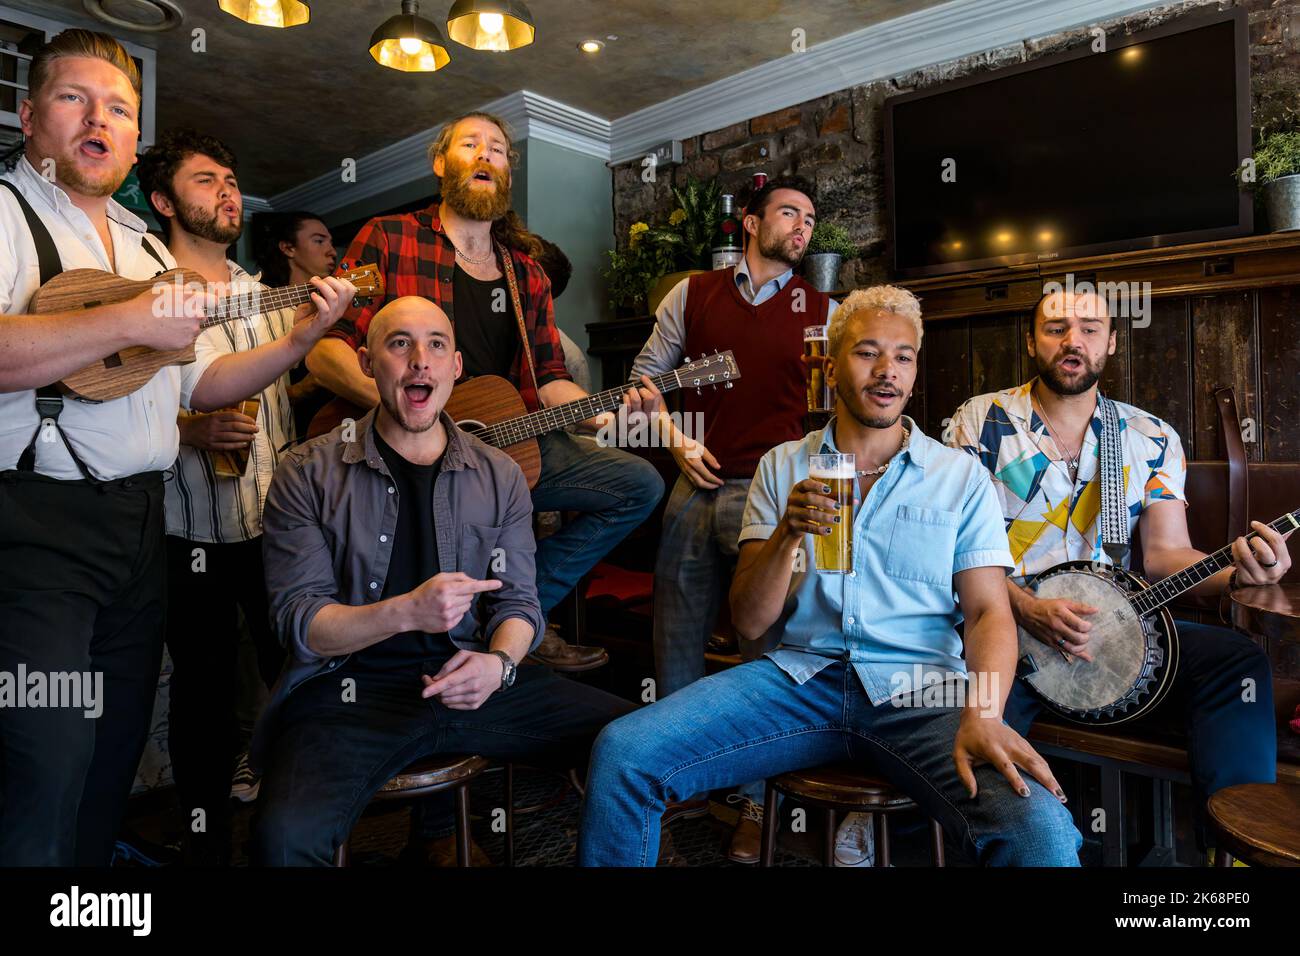 Choir of Man group singing, playing music and drinking beer in a pub, Grassmarket, Edinburgh, Scotland, UK Stock Photo